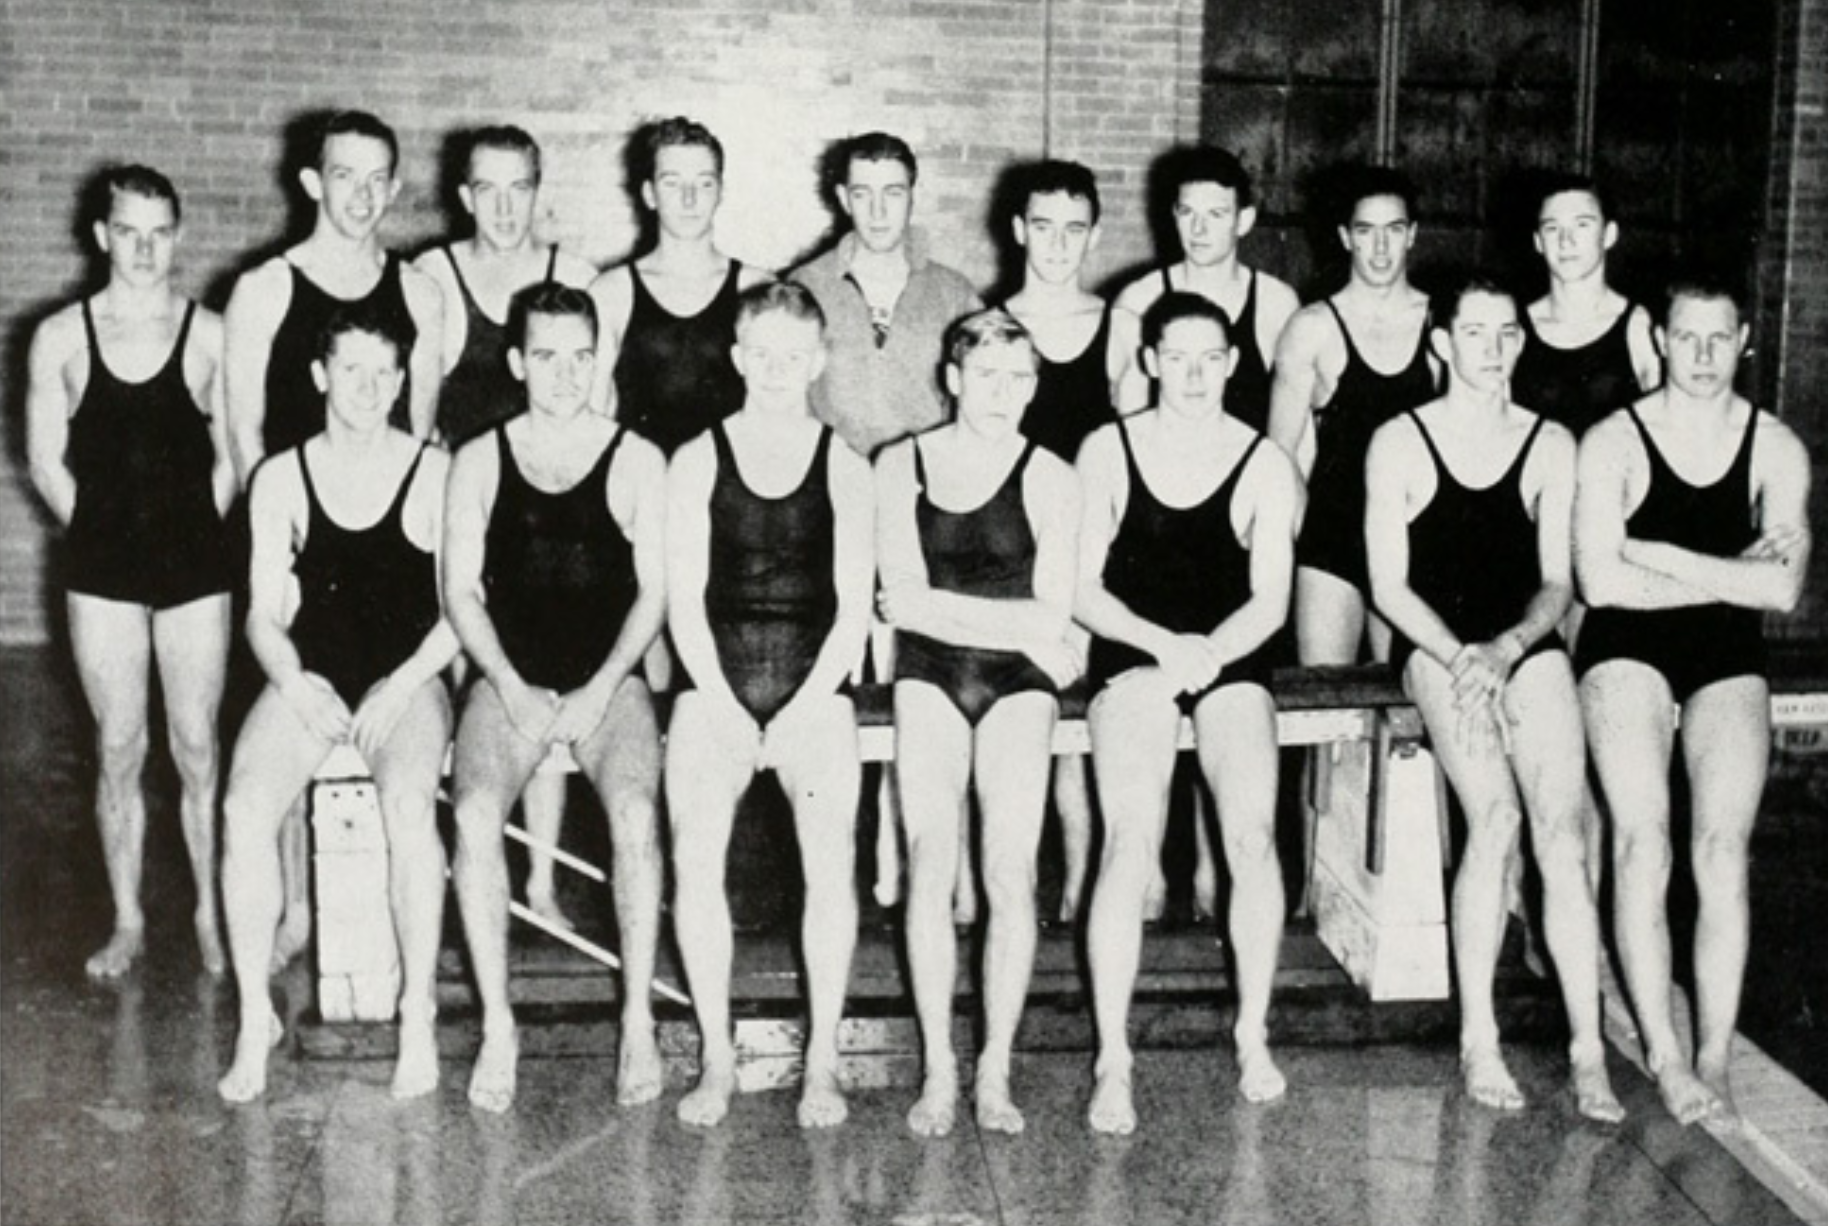 Full Team Photo 1935-36